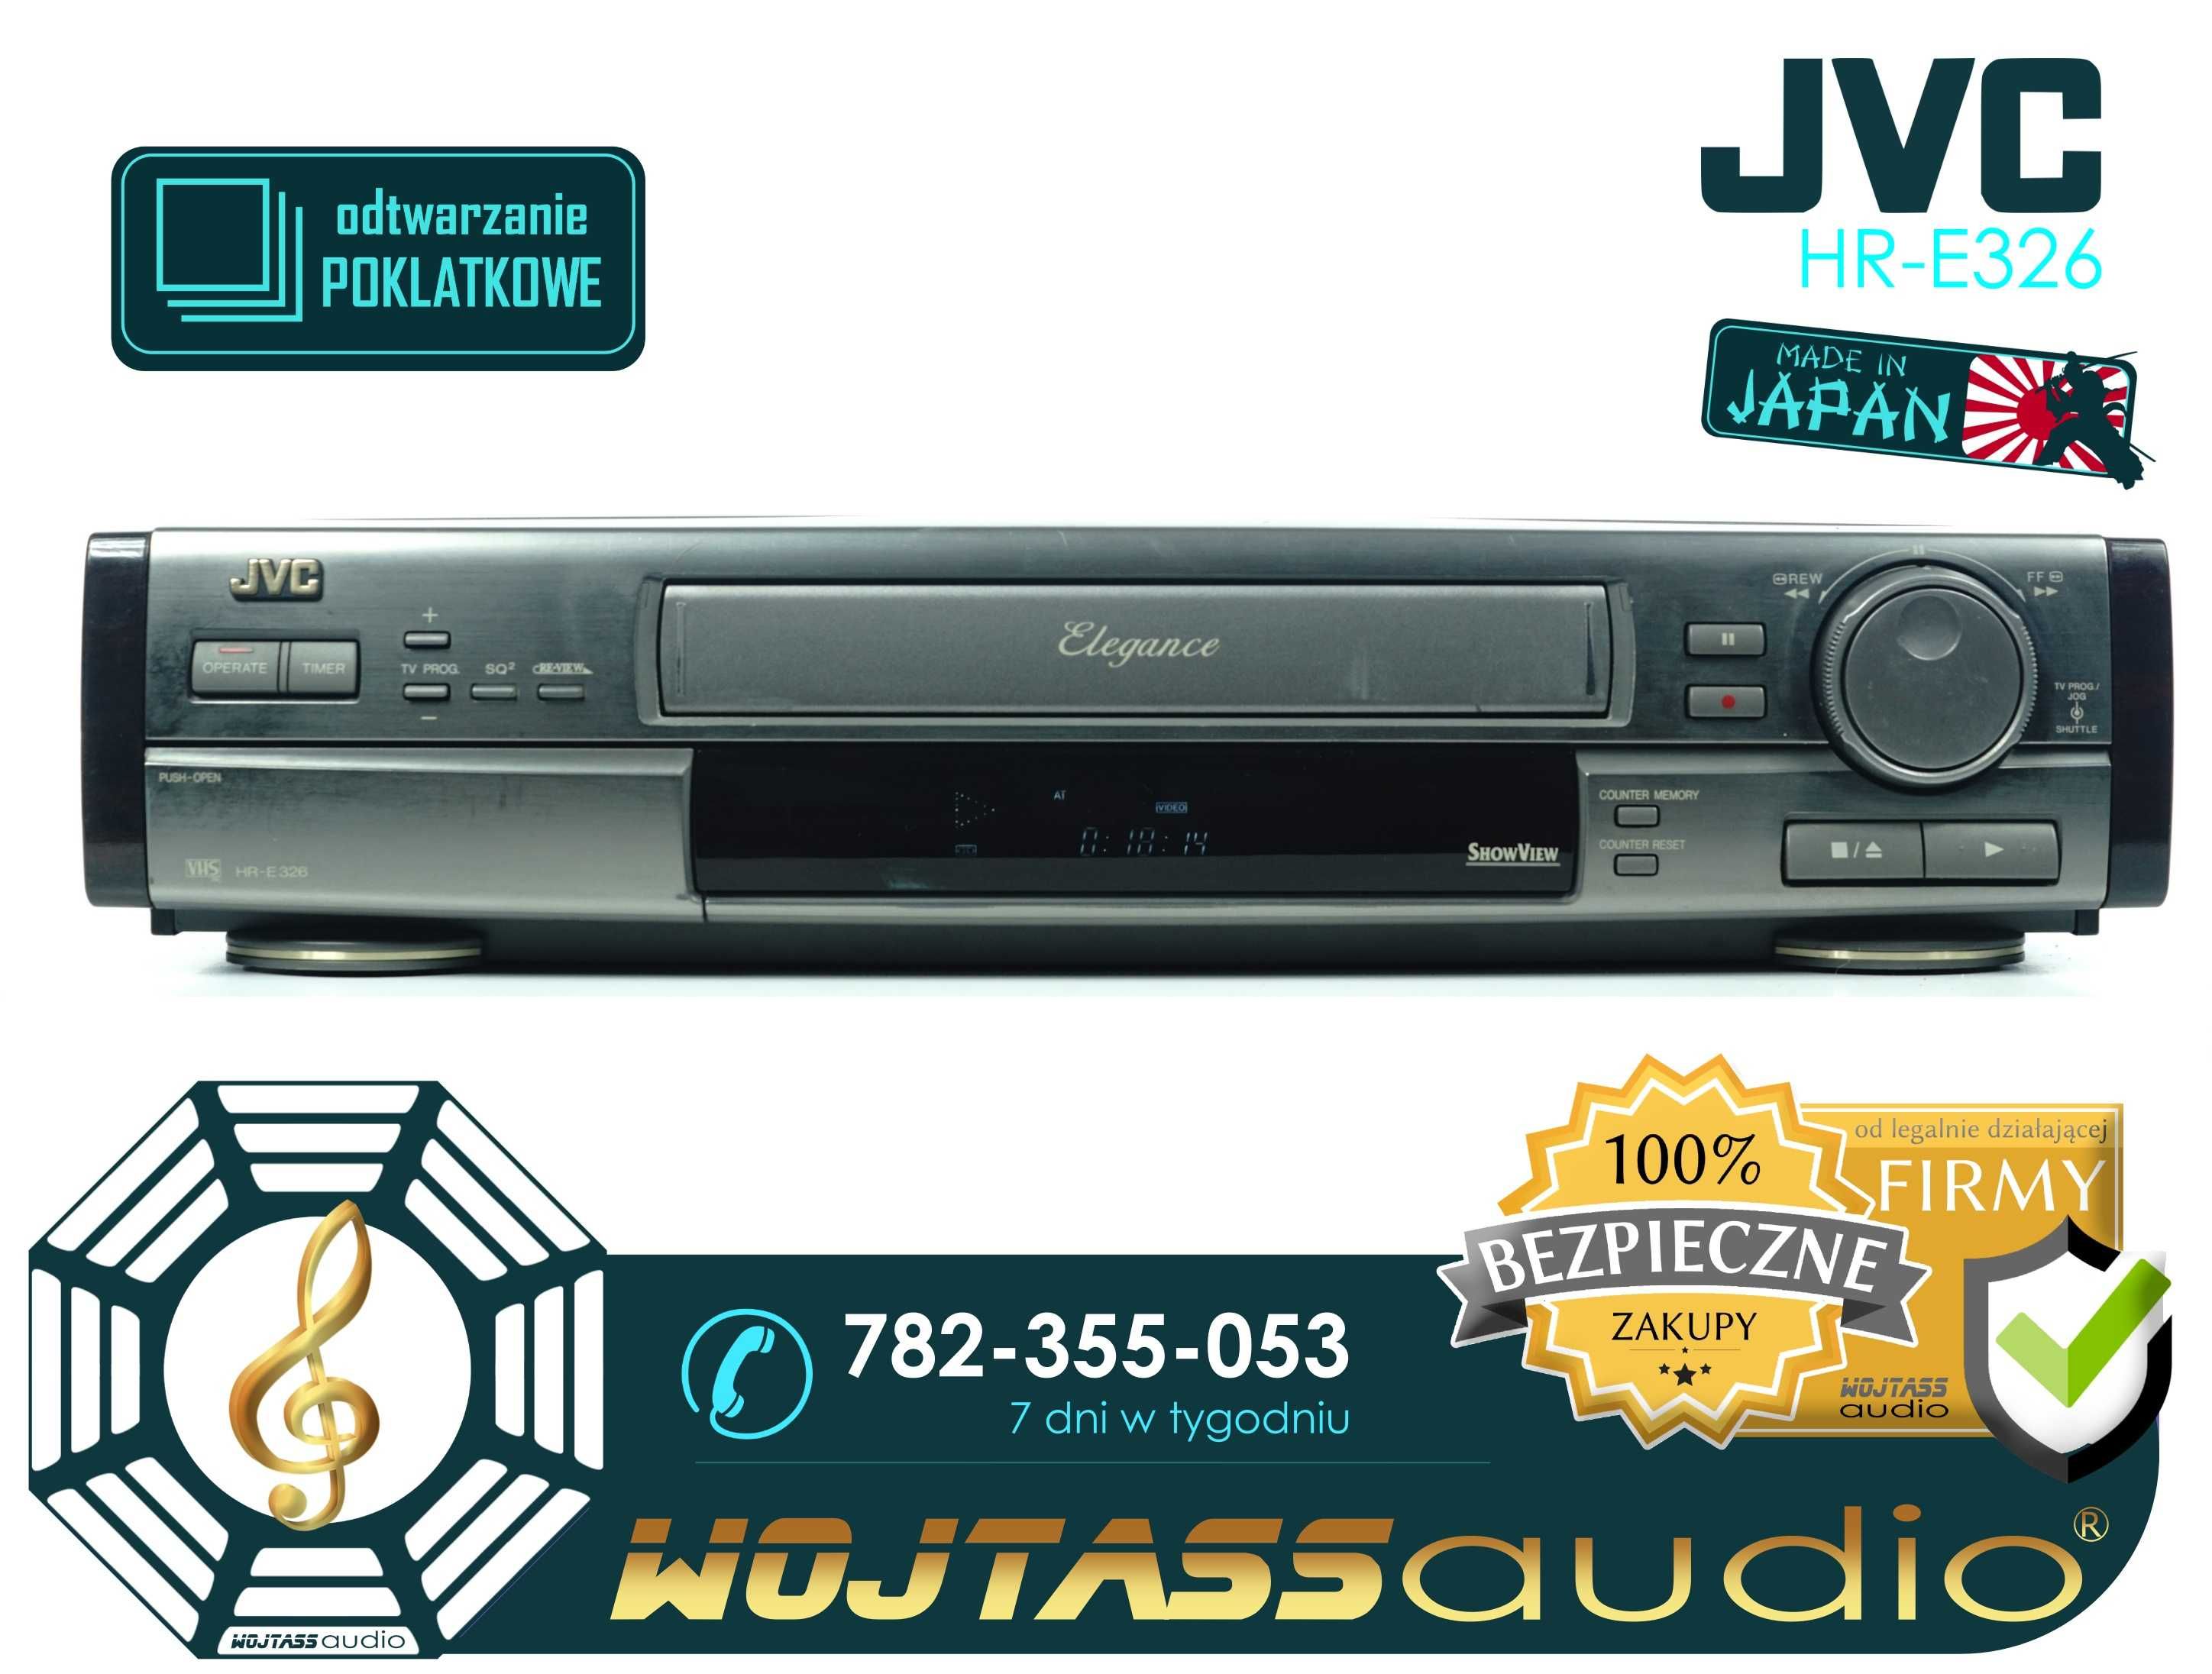 Magnetowid JVC HR-E326 *VHS VCR Odtwarzanie poklatkowe * Made in JAPAN